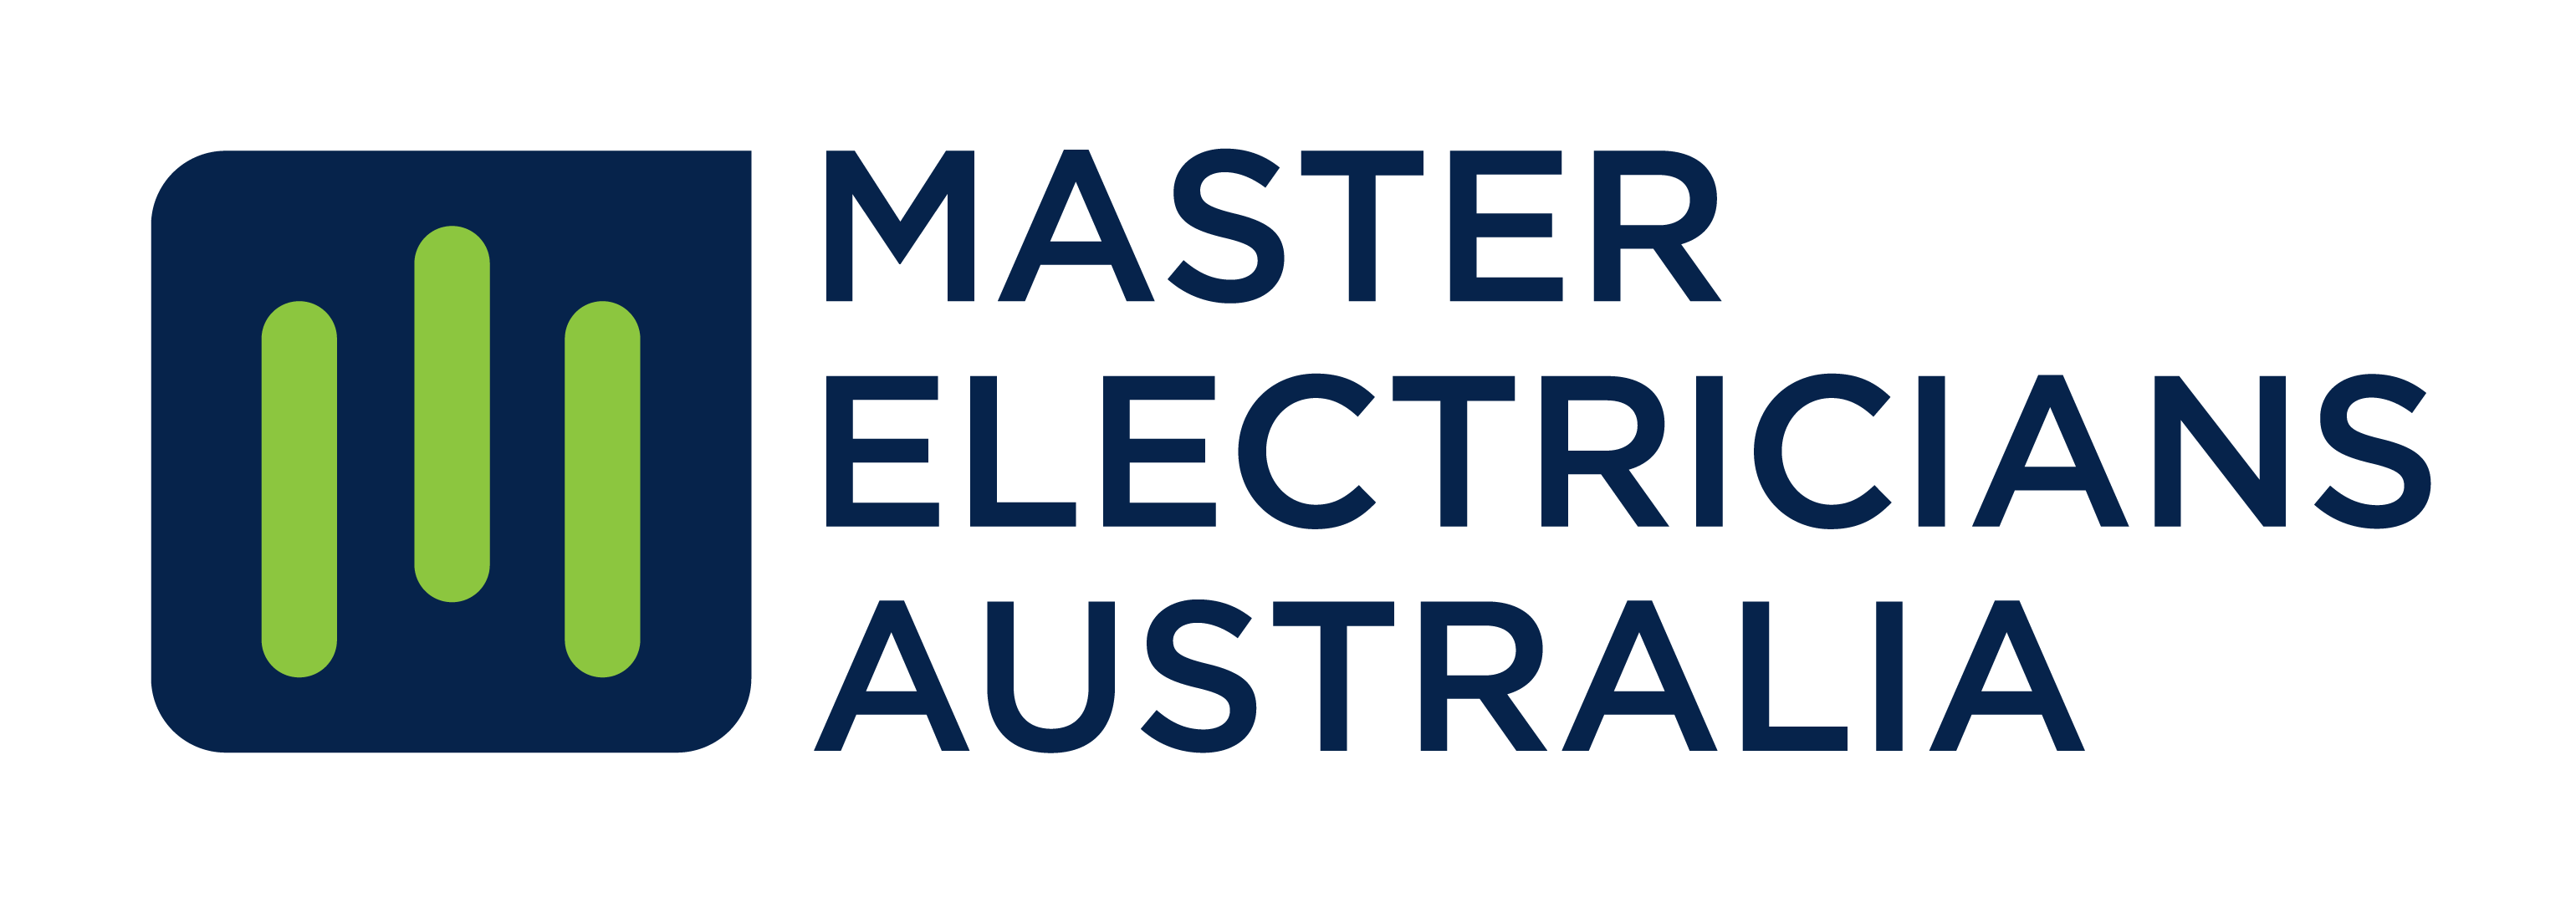 Master electricians australia logo